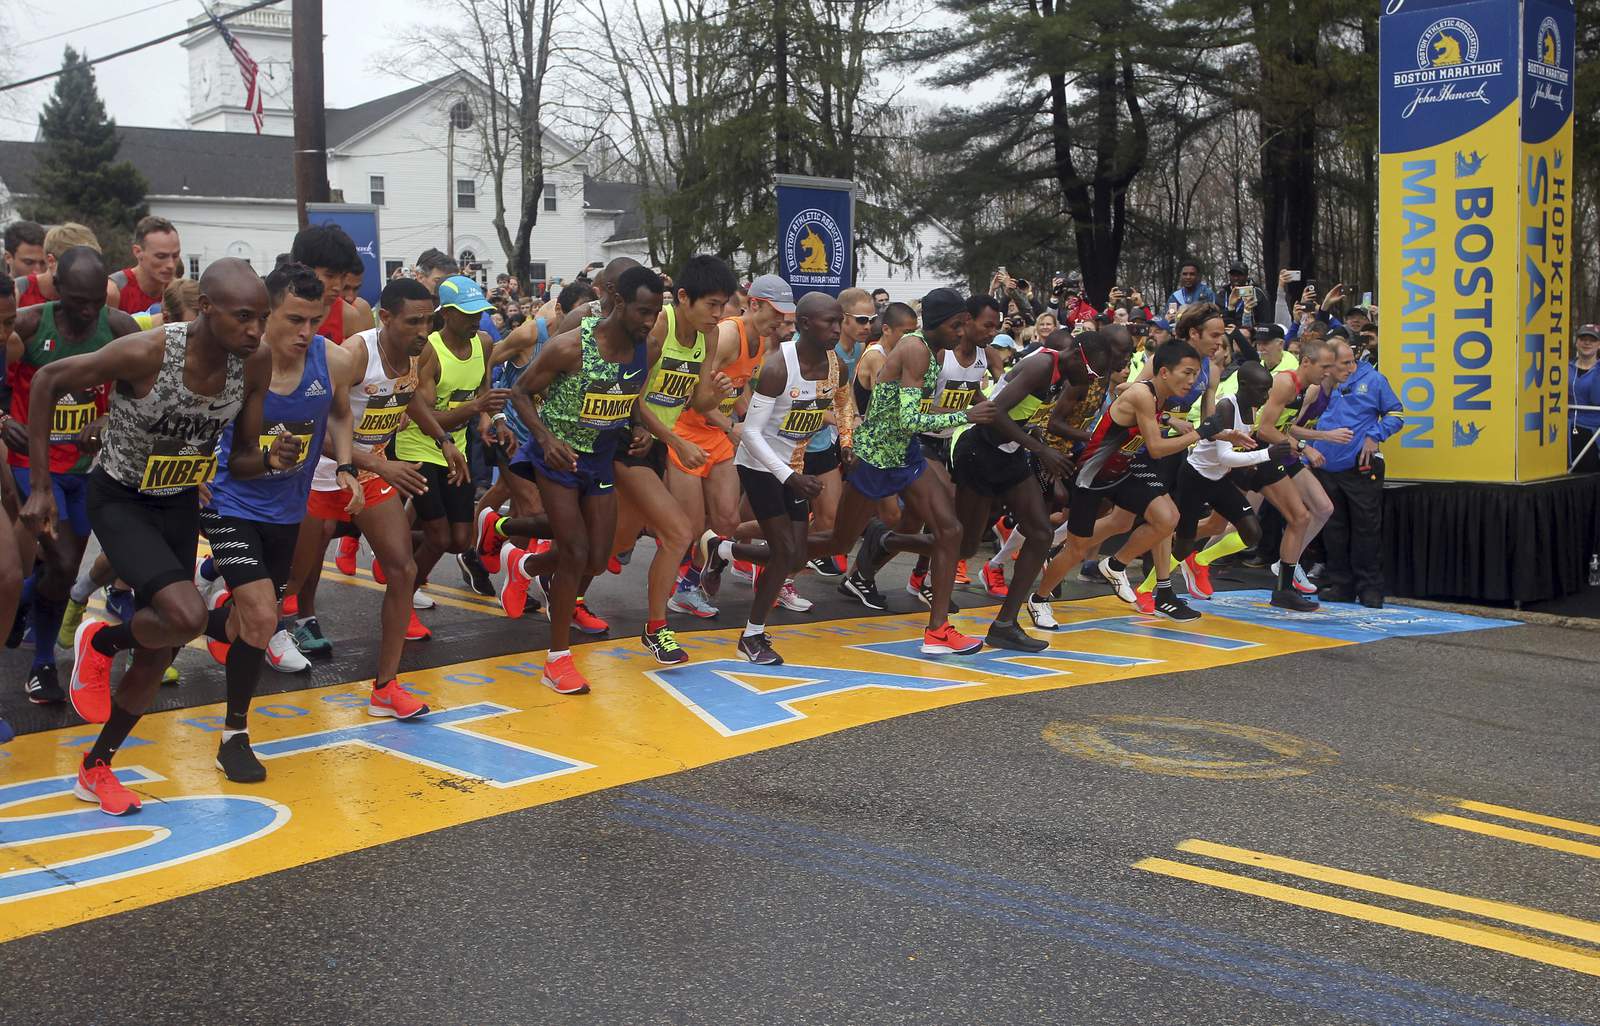 2021 Boston Marathon postponed at least until the fall